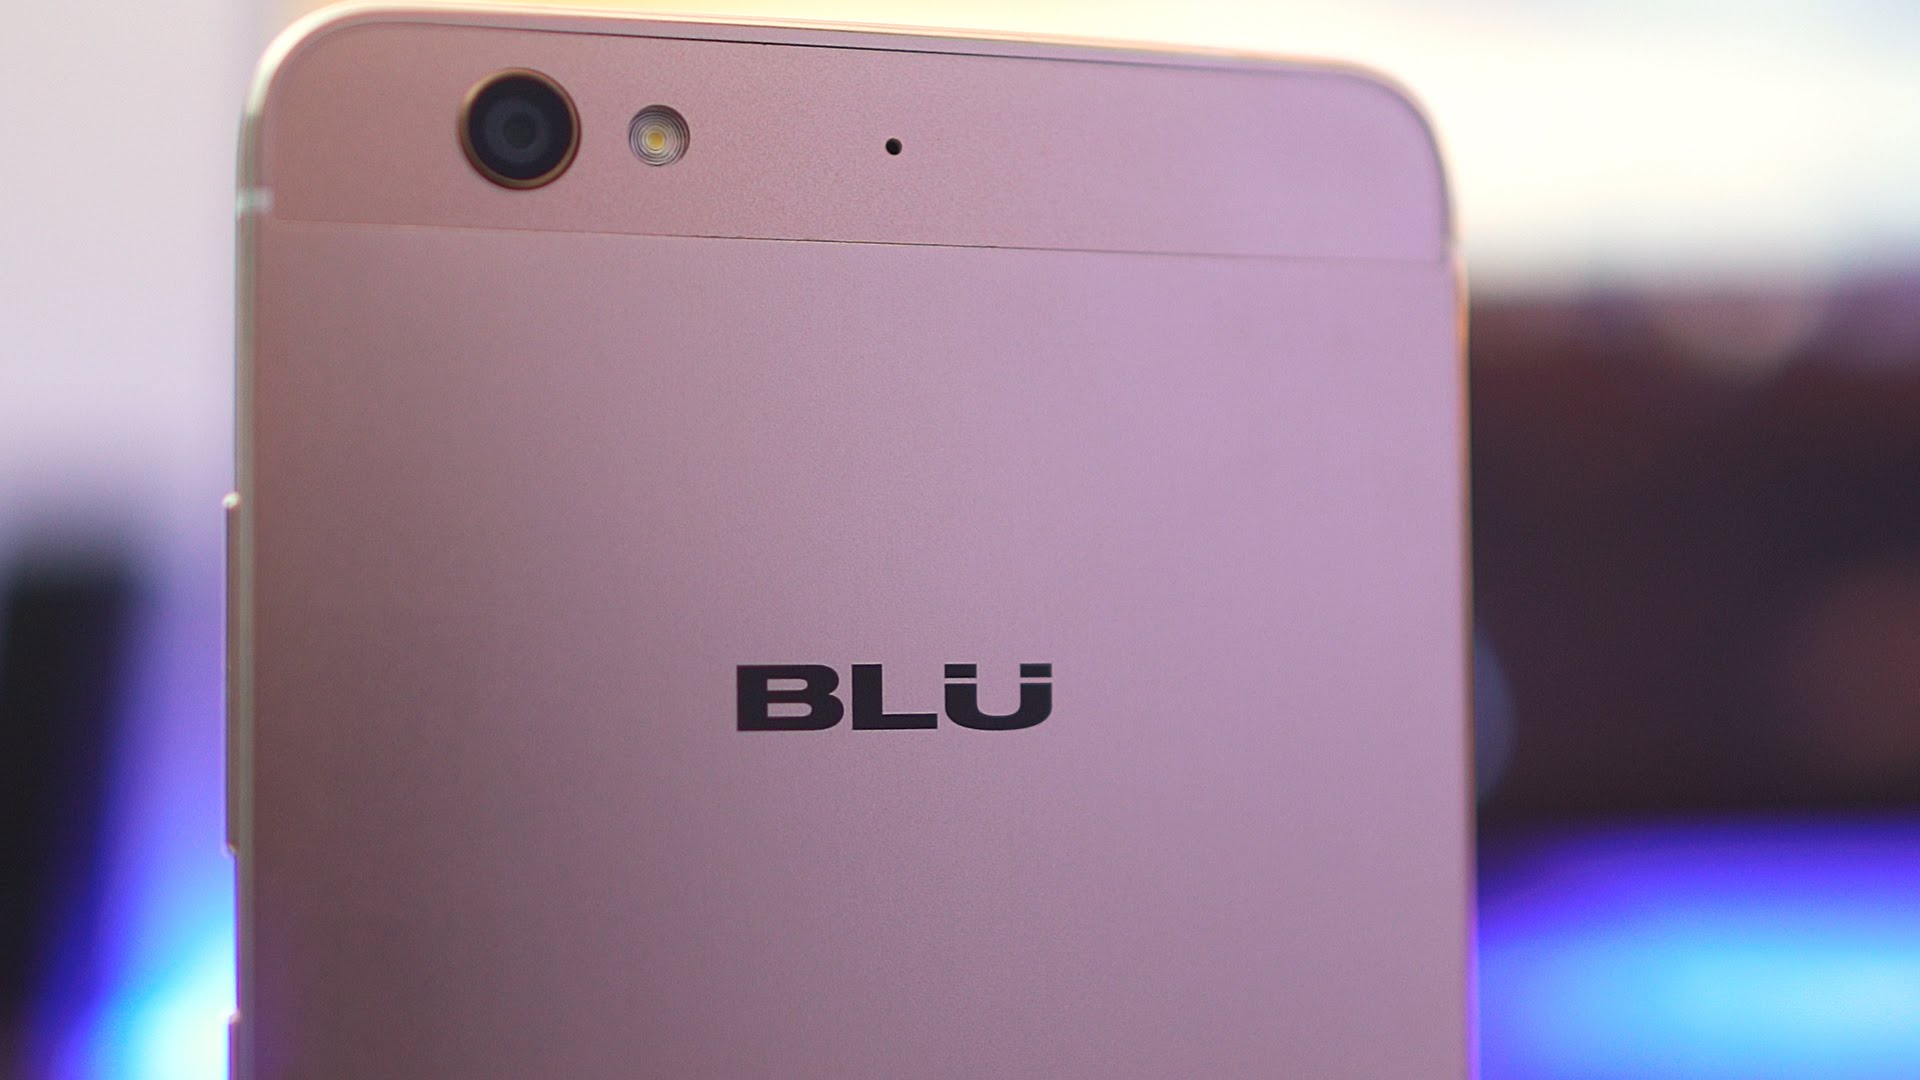 Kayaknya memang harus cari nama lain sih, soalnya ada merk handphone yang namanya Blu © YouTube/Carlos Delgado